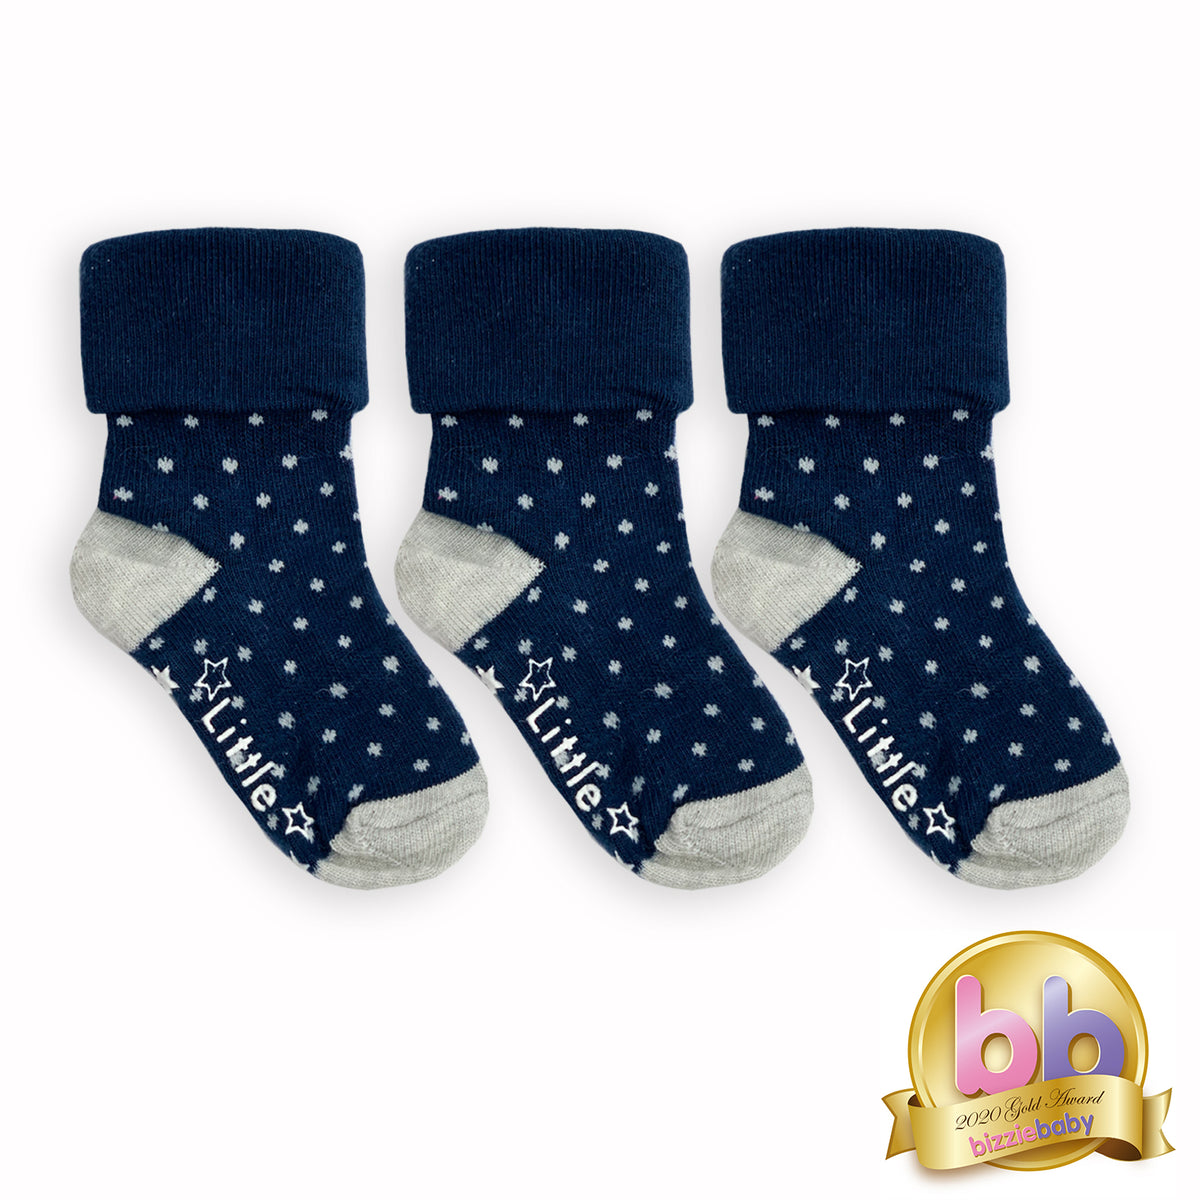 Non-Slip Stay On Baby and Toddler Socks - 3 Pack in Navy Dot